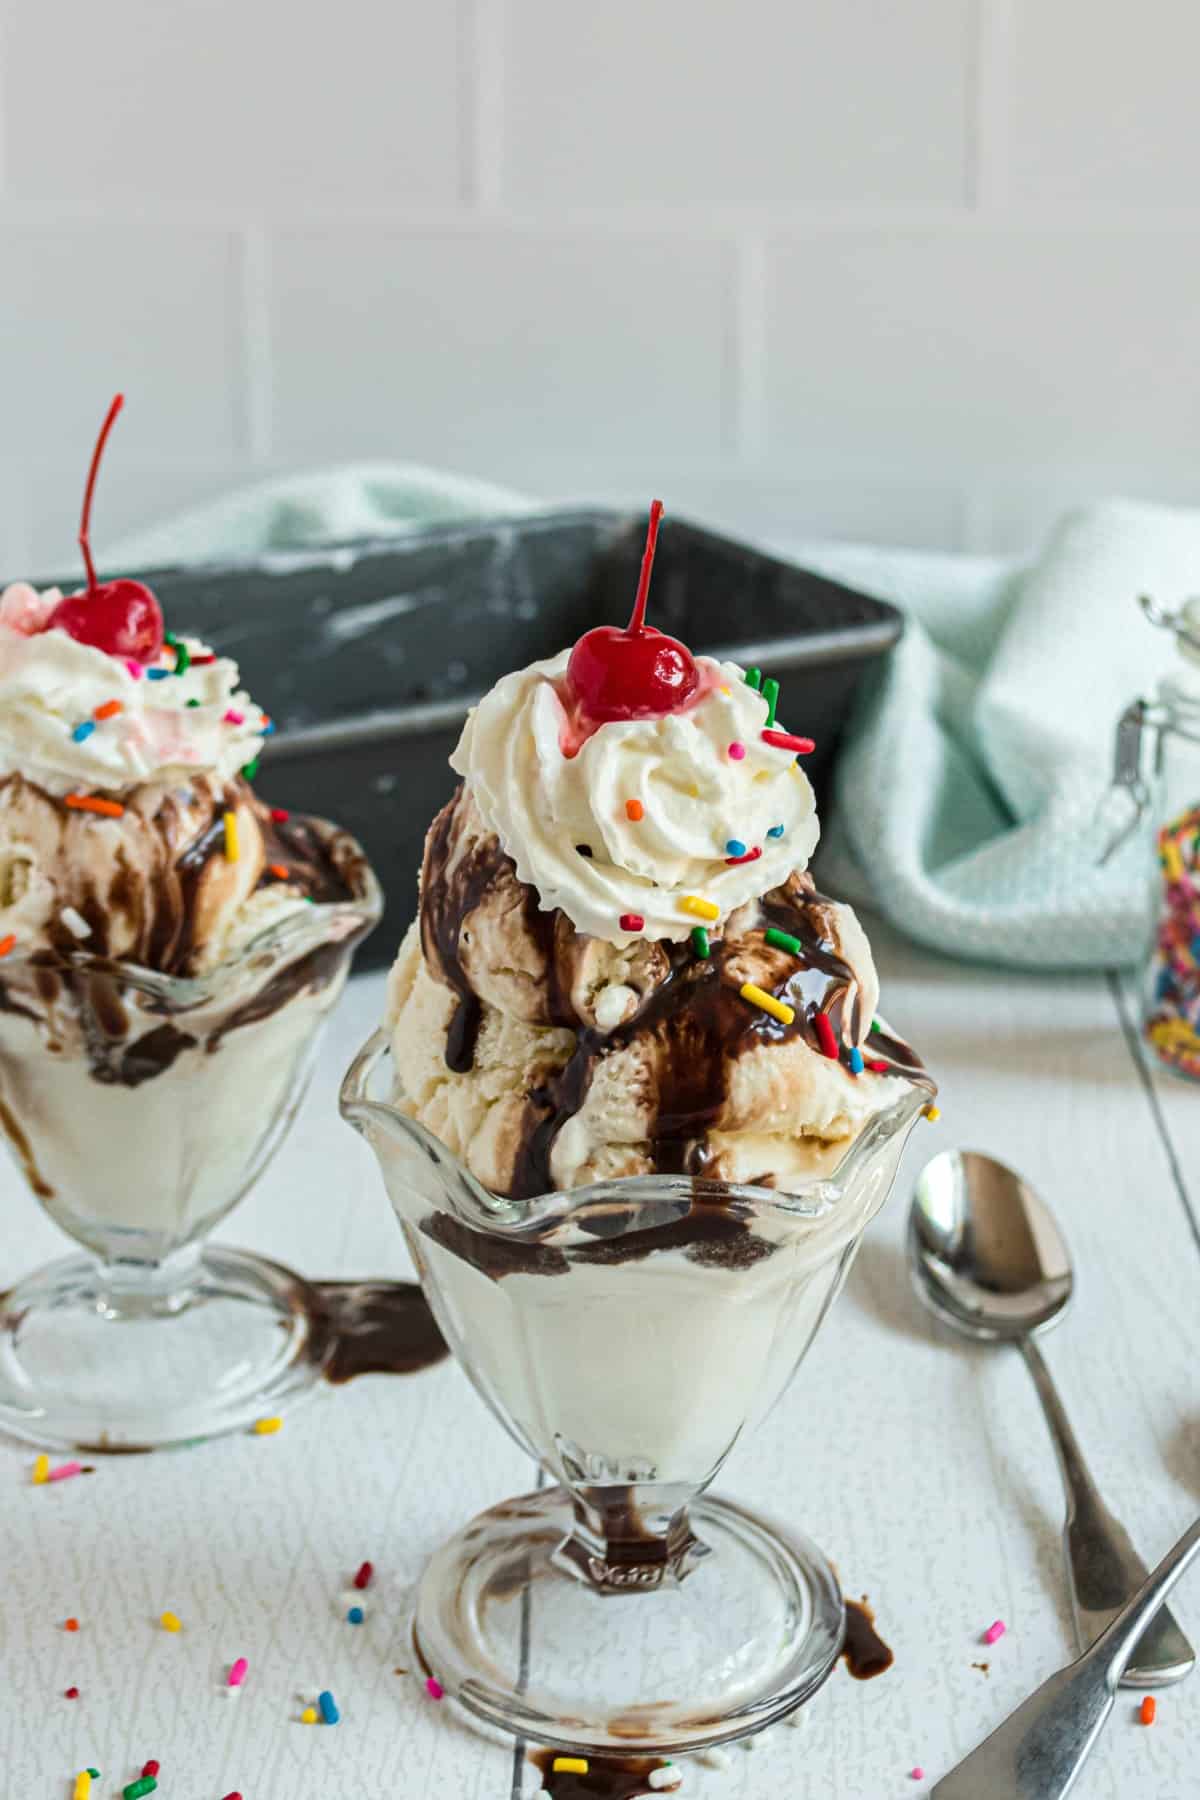 Vanilla ice cream sundae with chocolate, whipped cream, and a cherry.